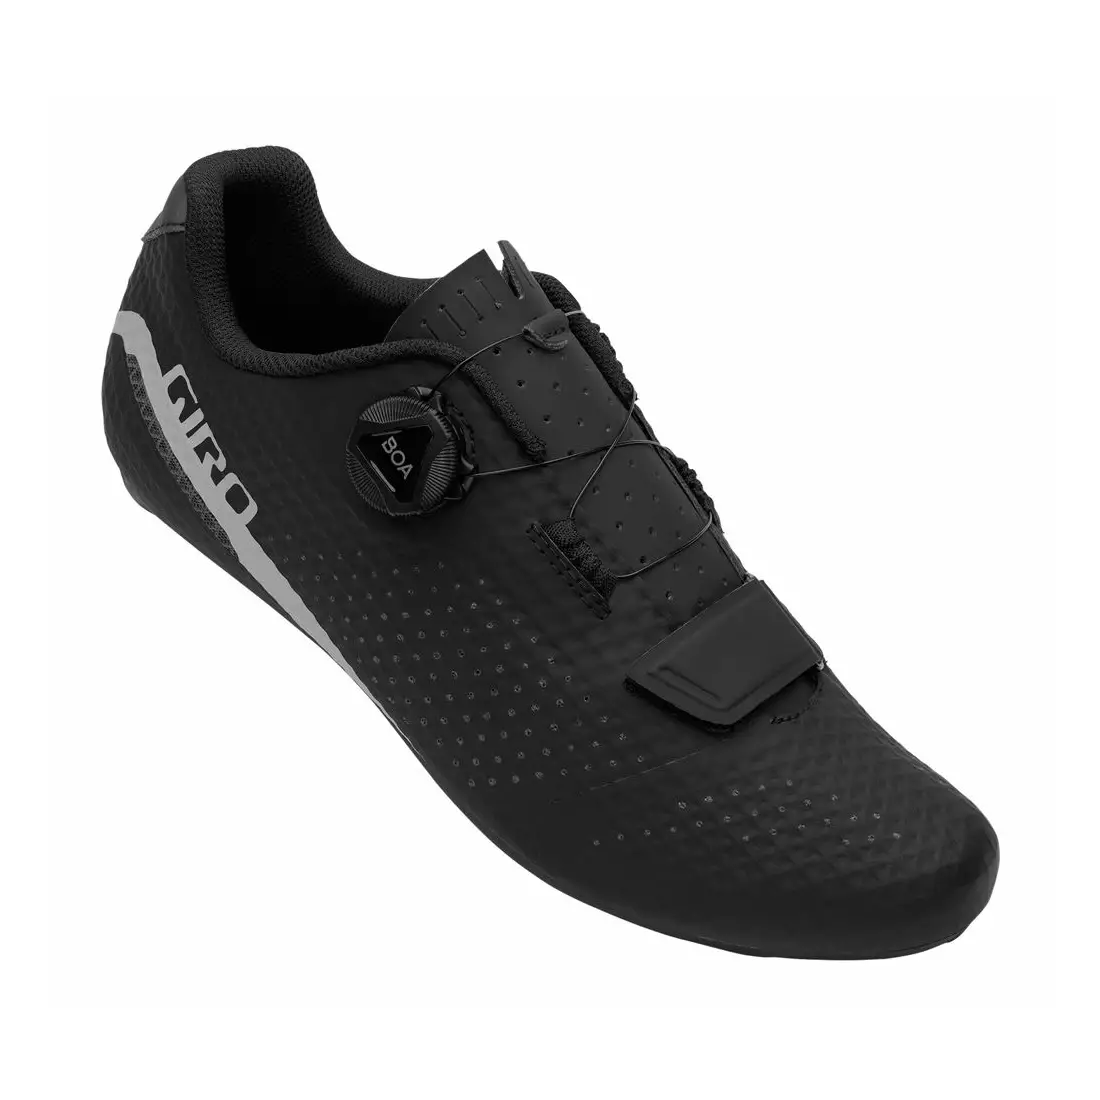 GIRO férfi kerékpáros cipő  CADET black GR-7123076